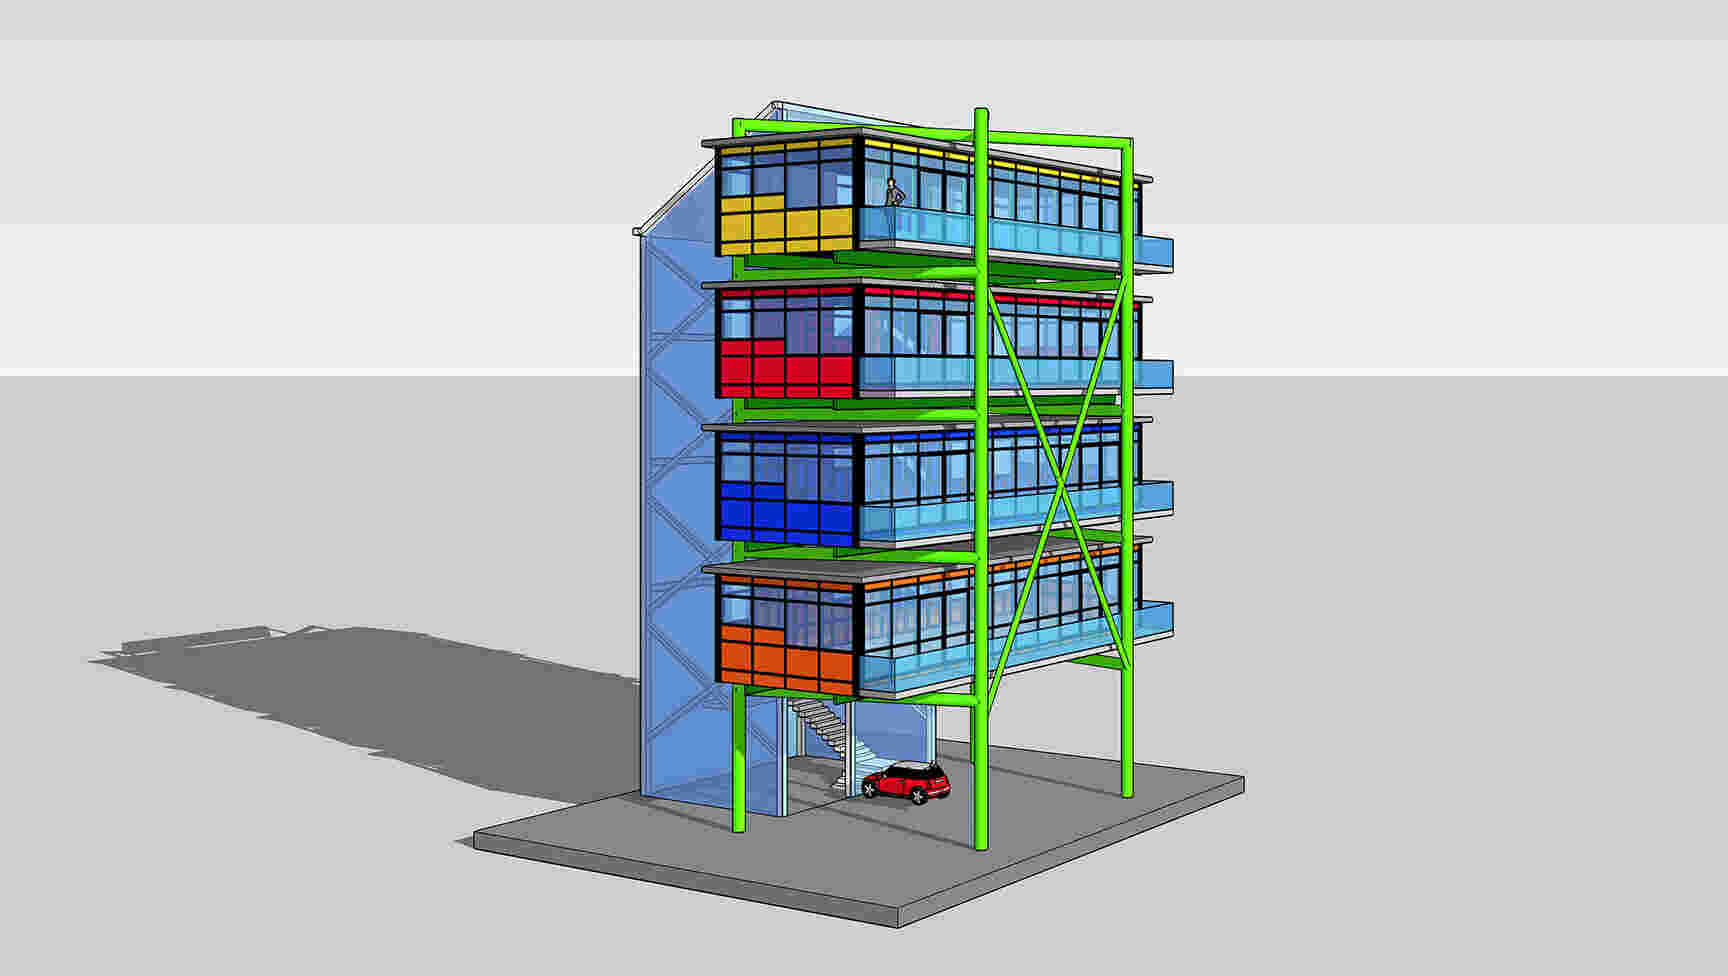 16 in. x 8 in. x 8 in. Light Weight Concrete Block Regular – Denali  Building Supply